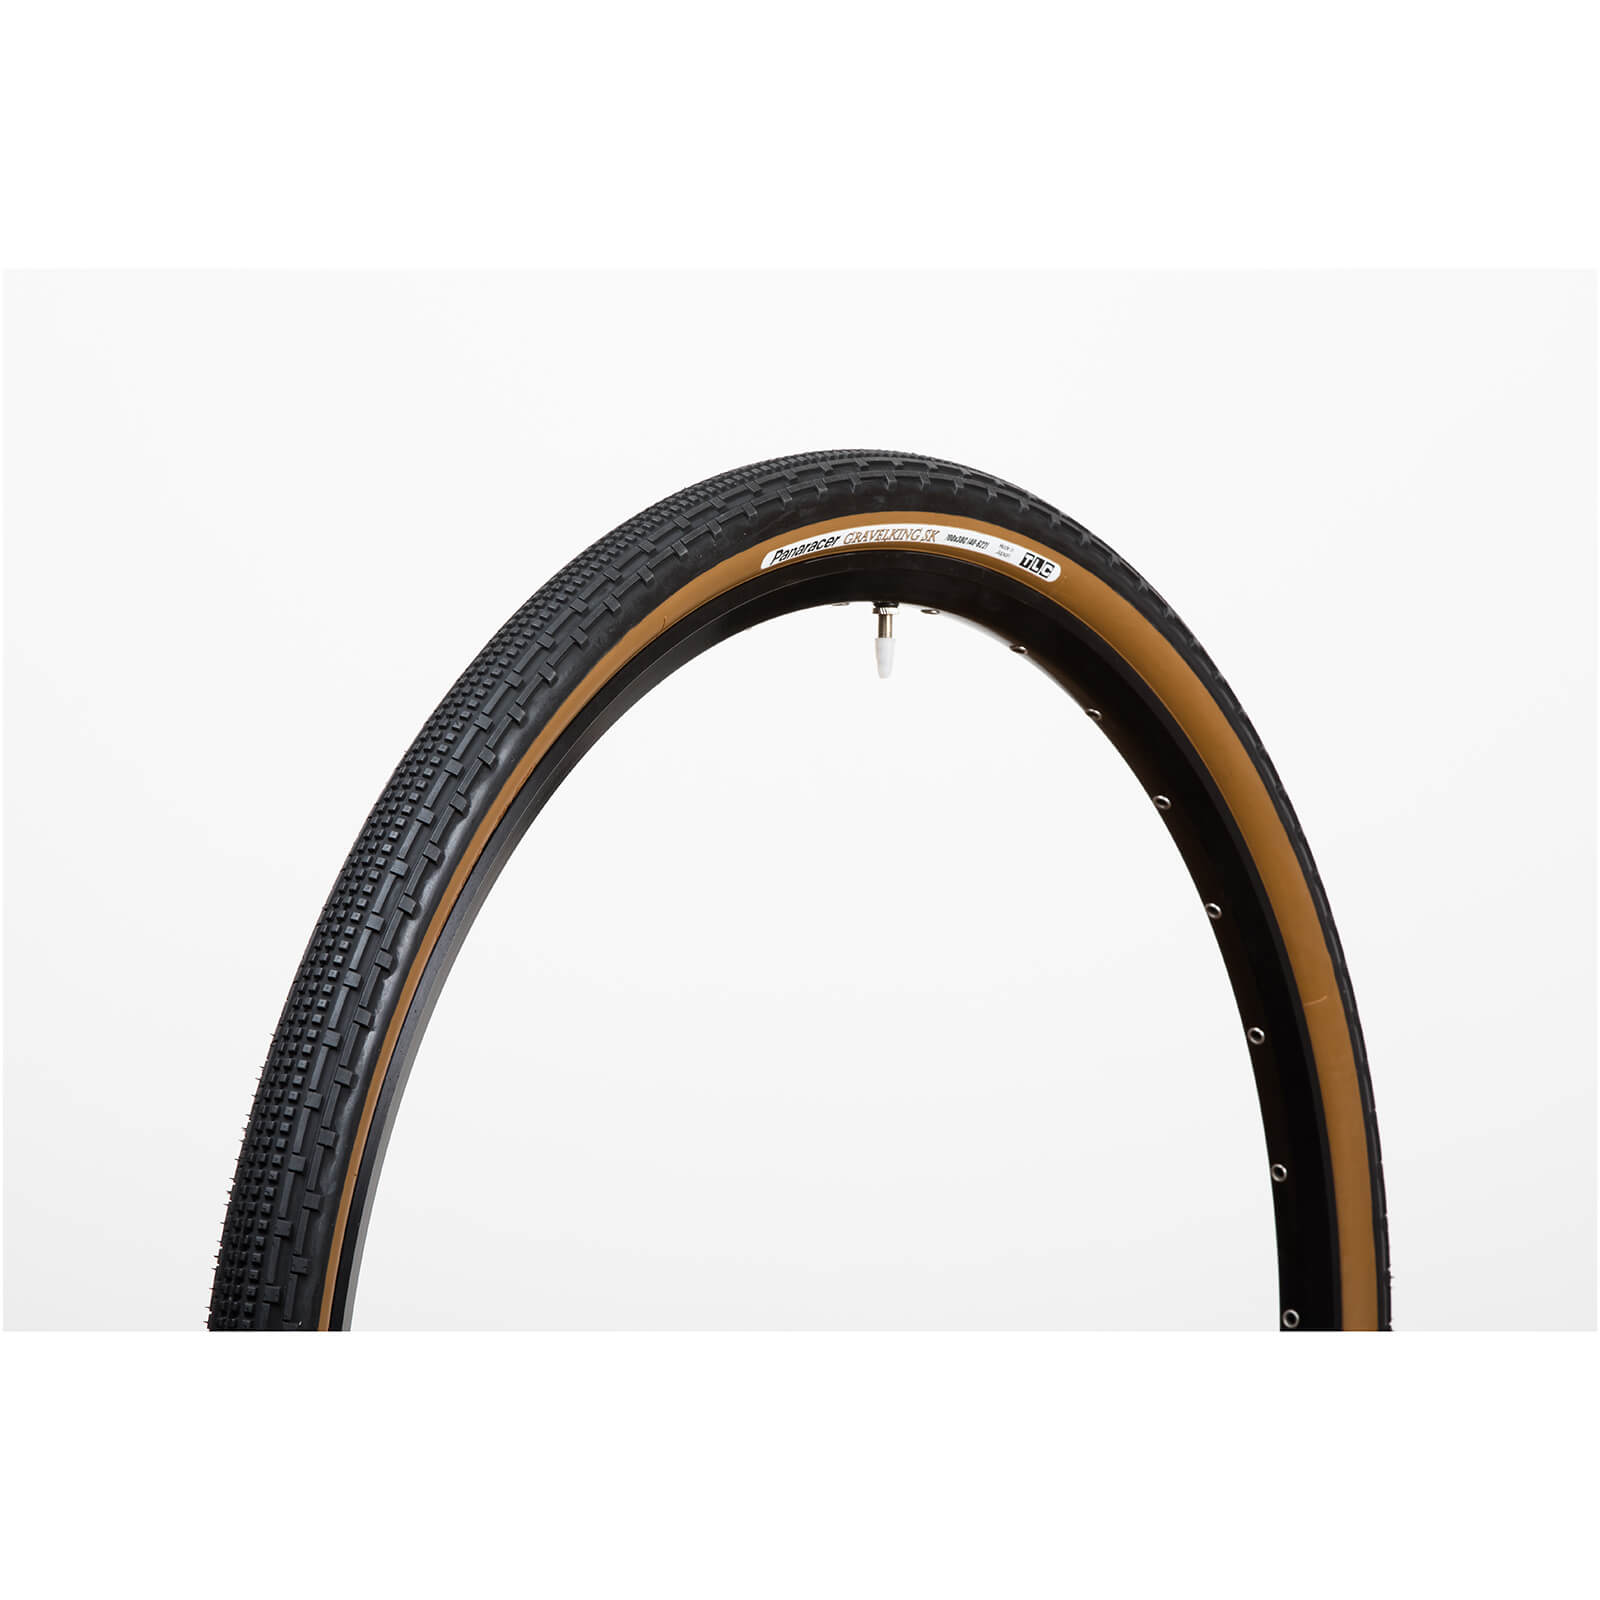 Panaracer Gravel King SK Tubeless Compatible Clincher Tyre - 700c x 43mm - black/brown